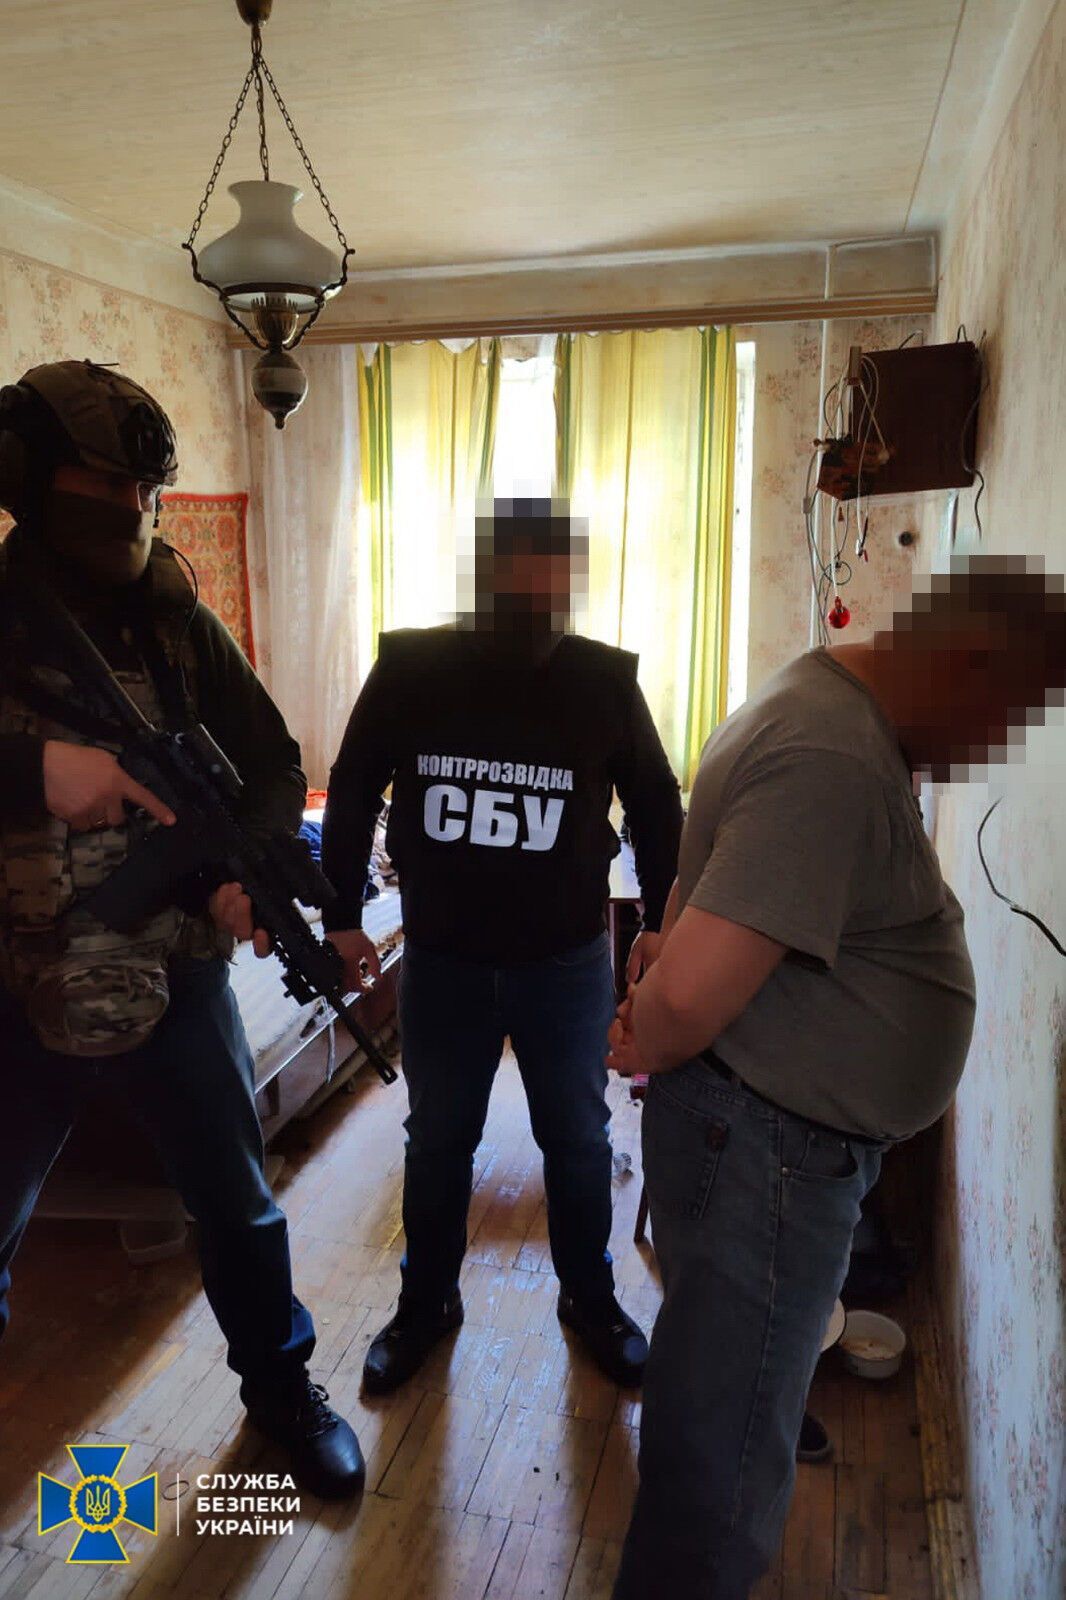 СБУ обезвредила агентурную группу ФСБ, готовившую ракетные удары по объектам "Укрзалізниці". Фото